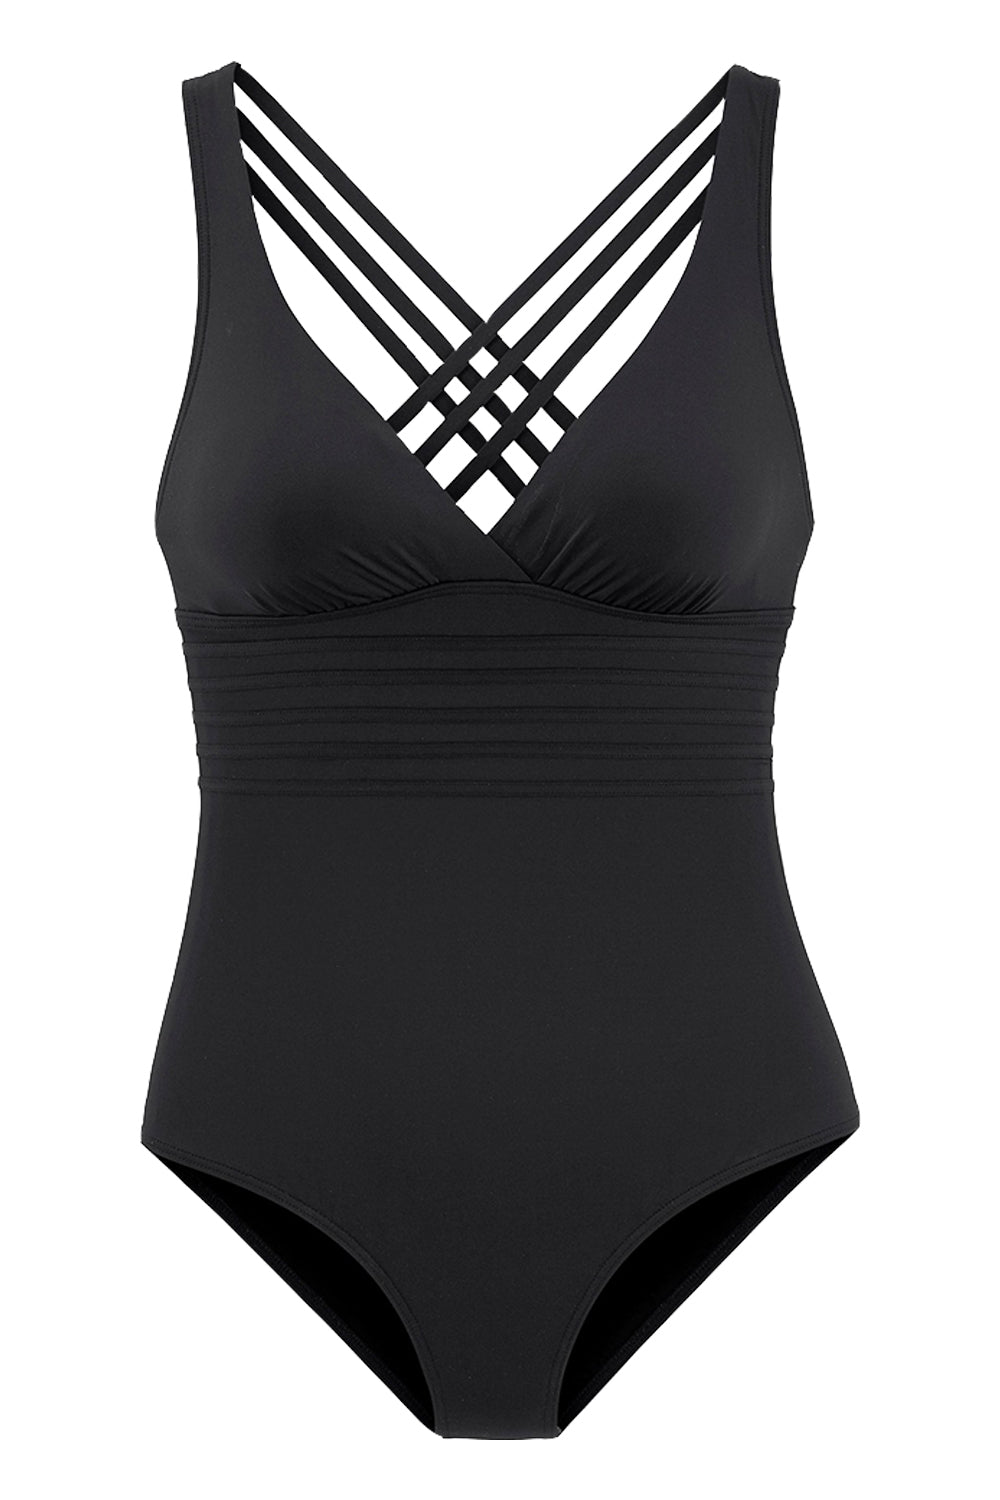 Iyasson Deep V-neckline With Cross Design One-piece Swimsuit